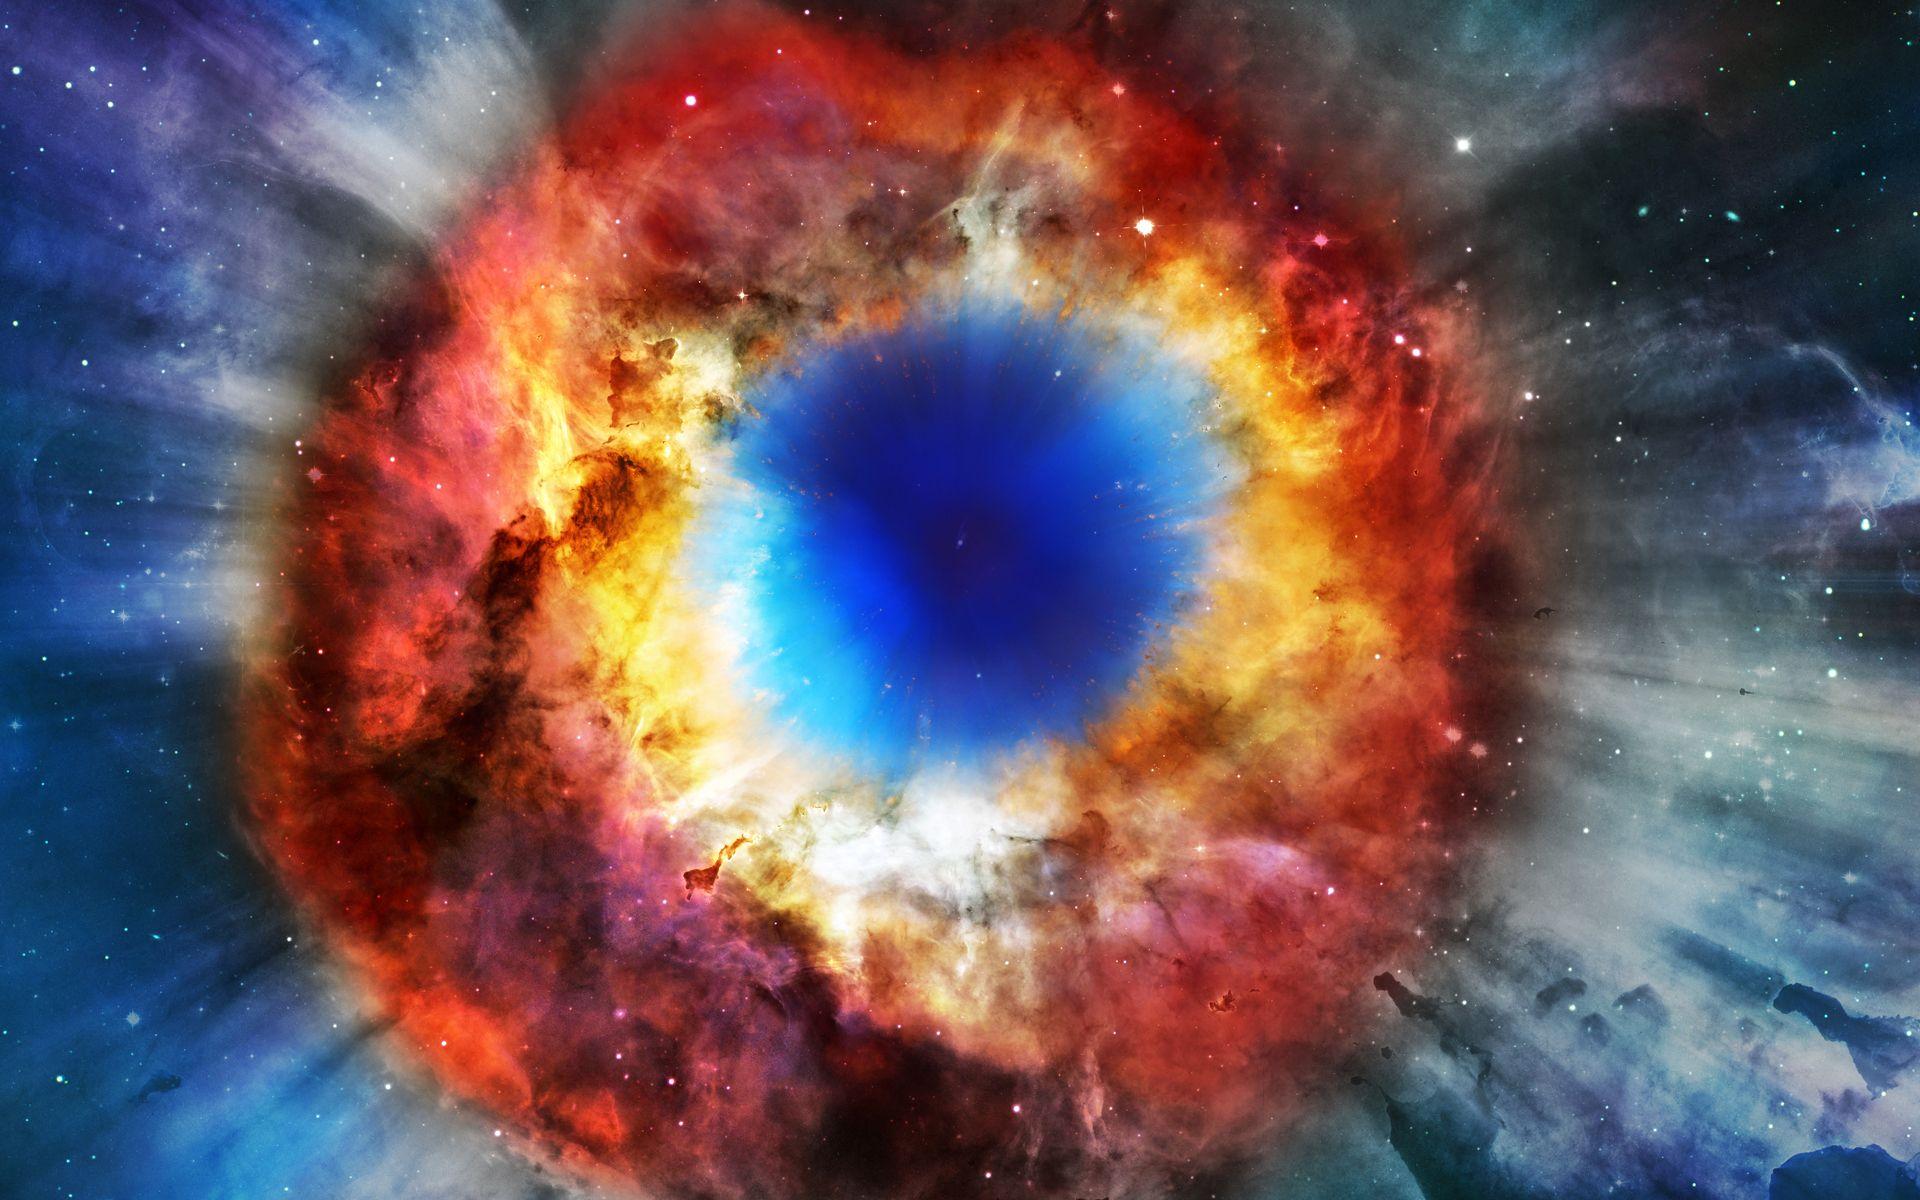 God's Eye Nebula Wallpapers - Top Free God's Eye Nebula Backgrounds